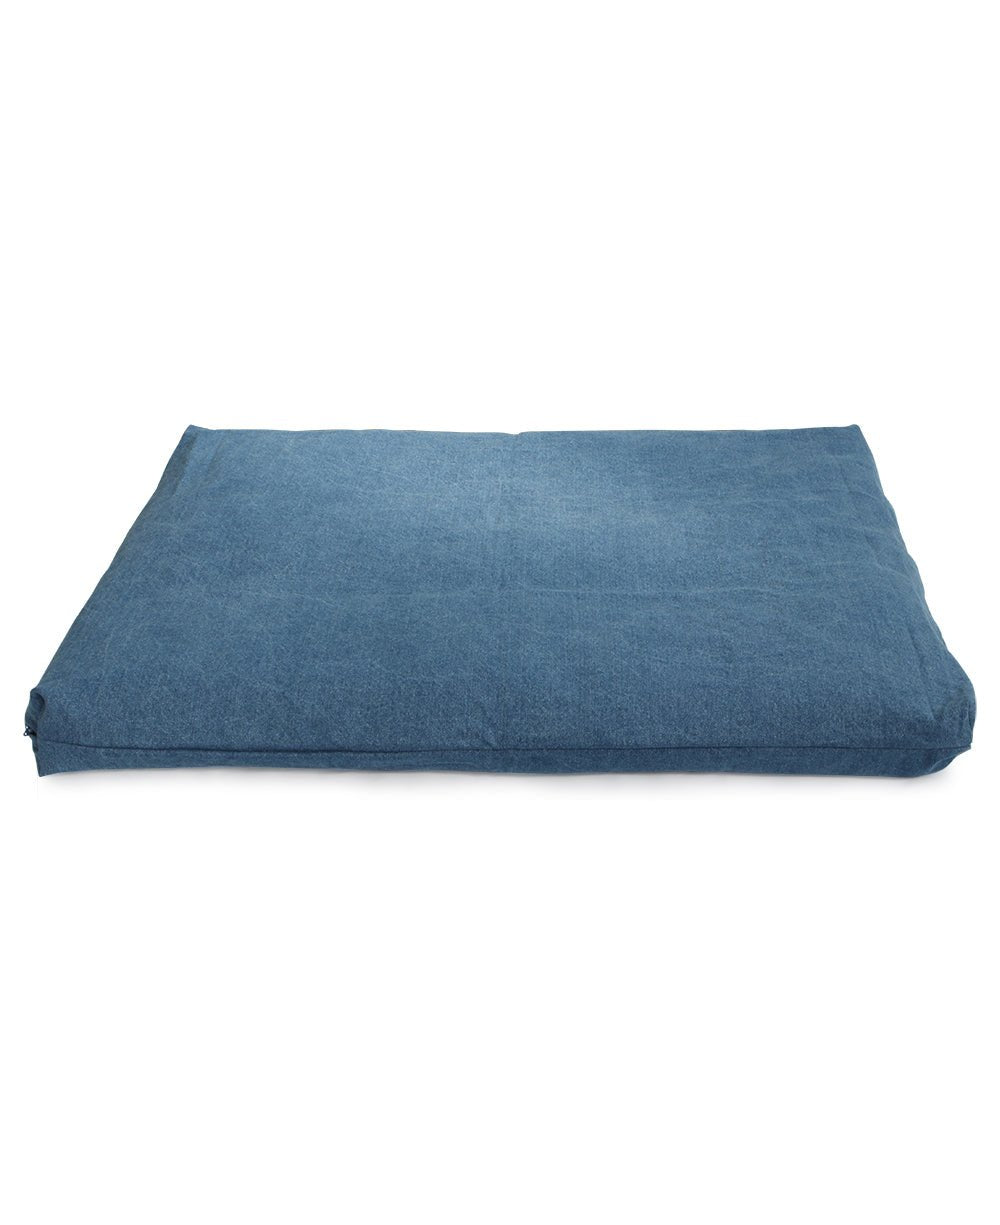 Classic Blue Zabuton Meditation Mat Cushion - Massage Cushions